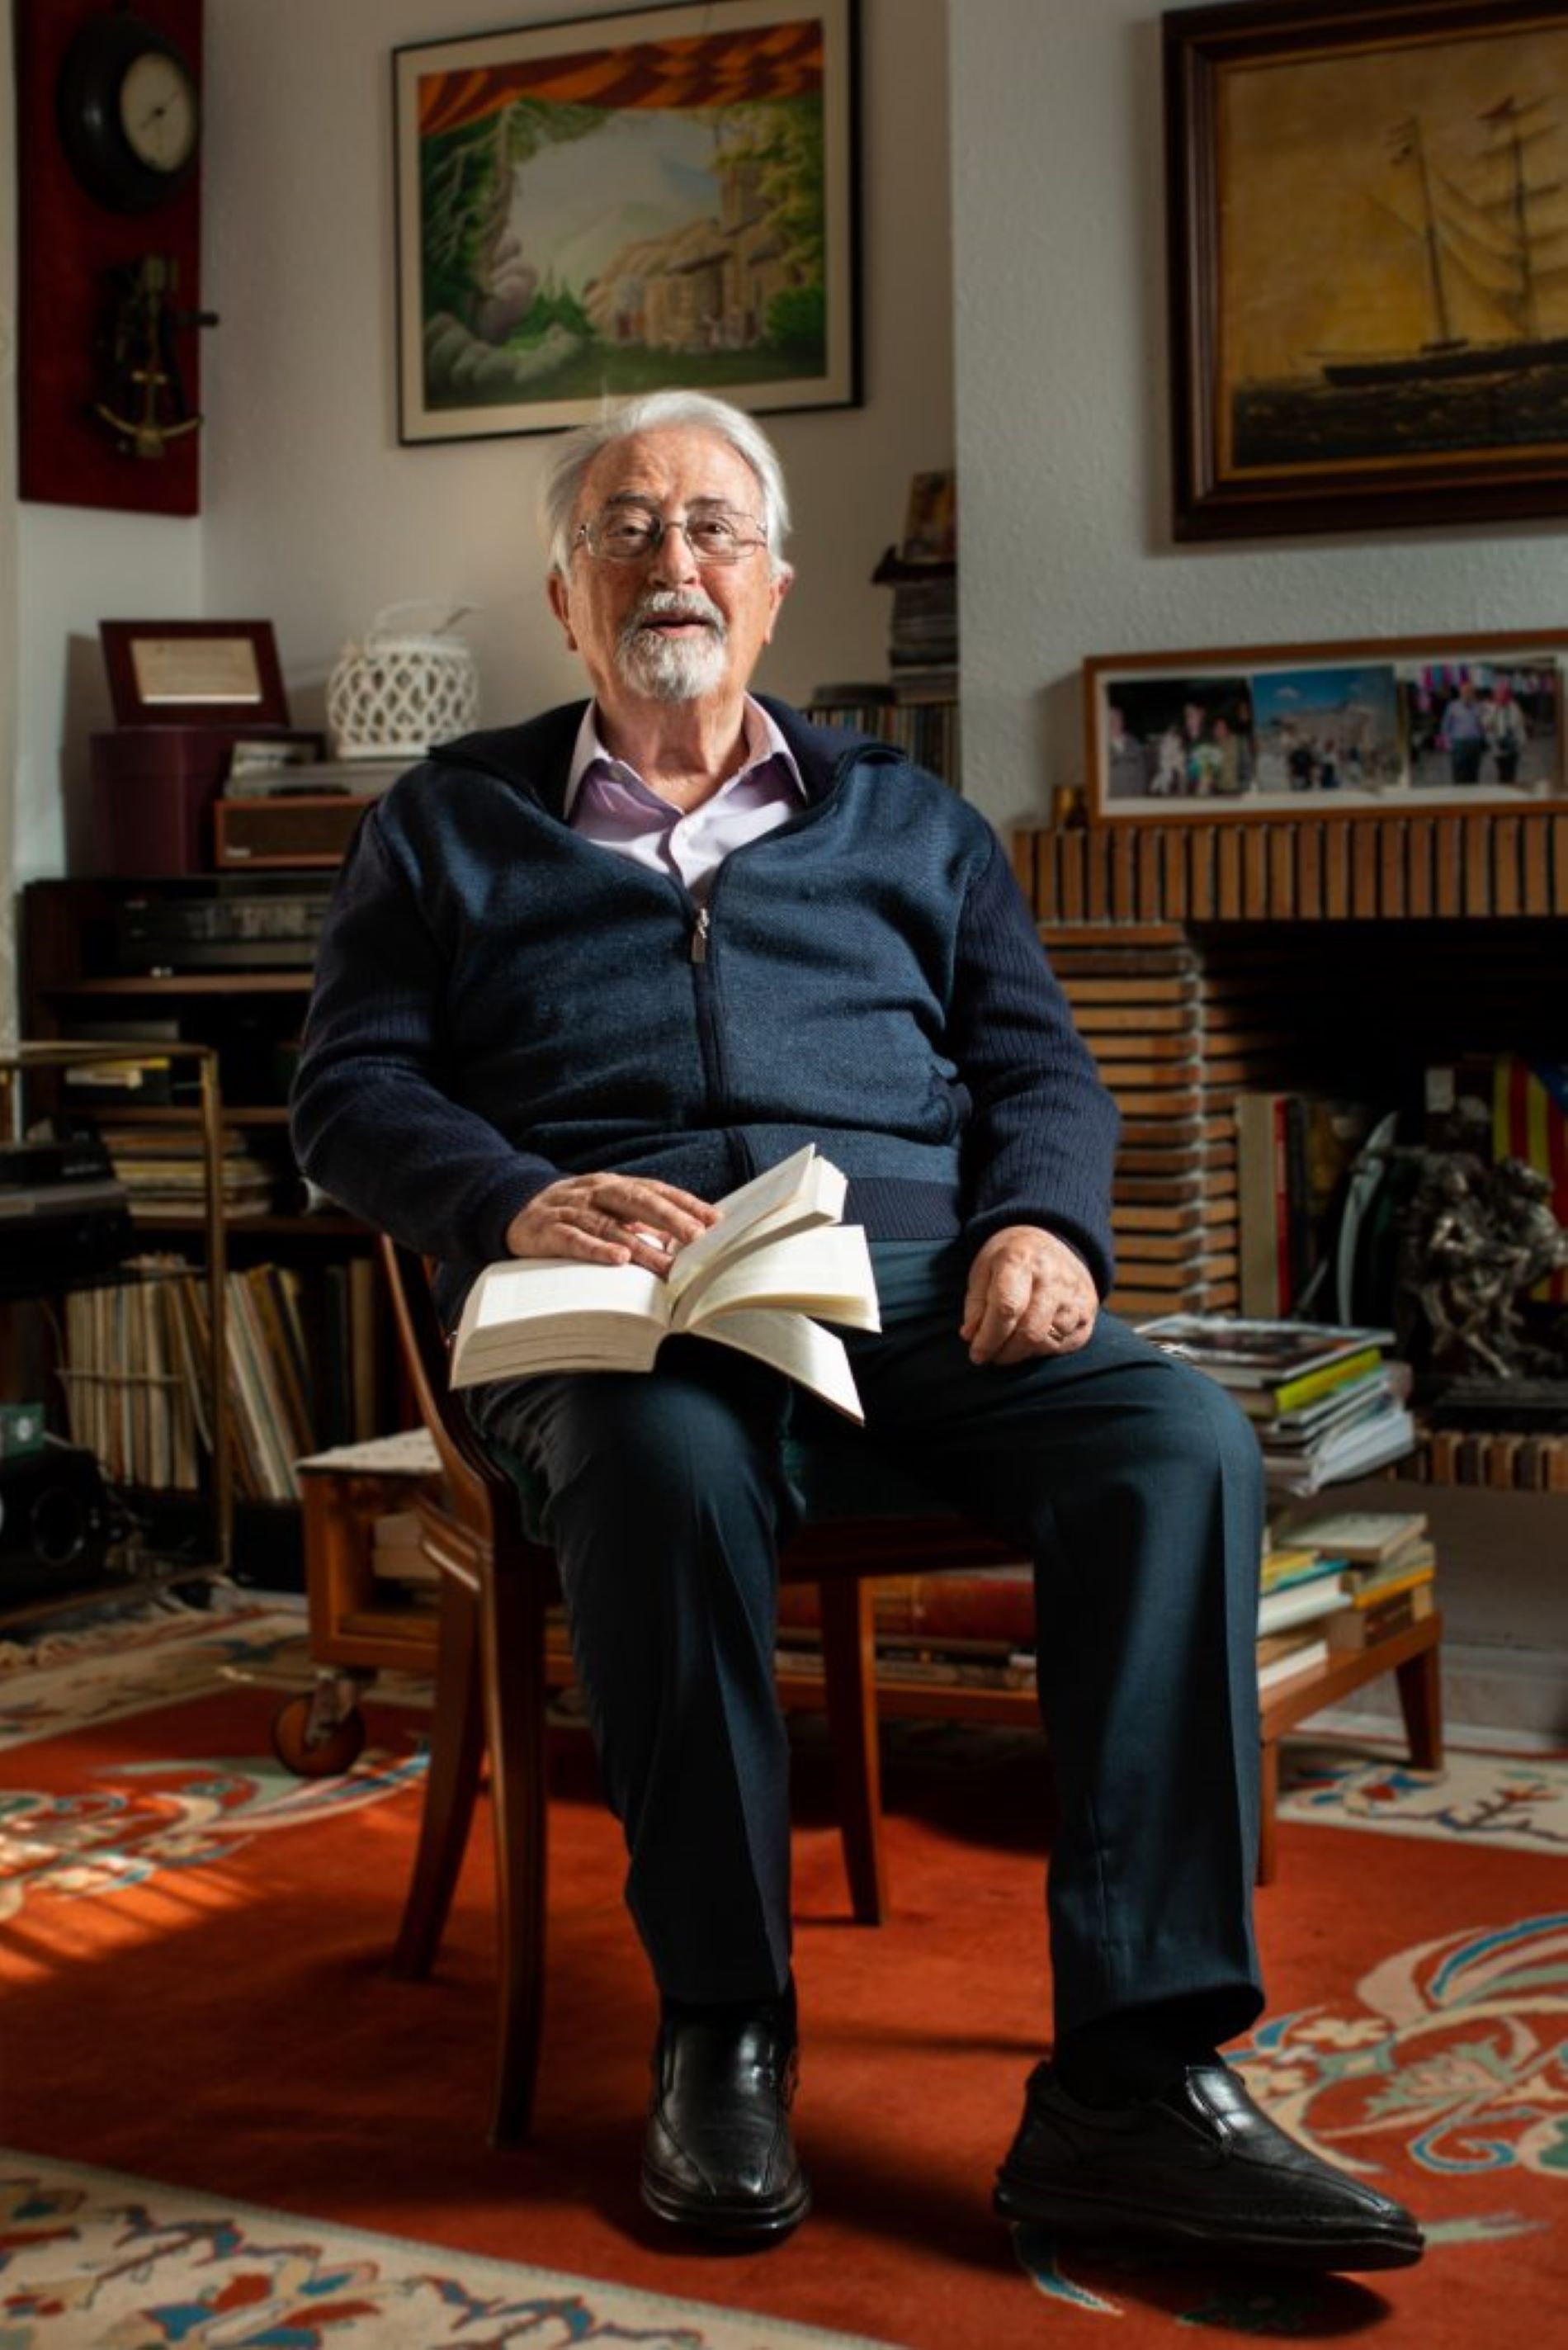 Joaquim Arenas, padre de la inmersión lingüística    Plataforma per la Llengua